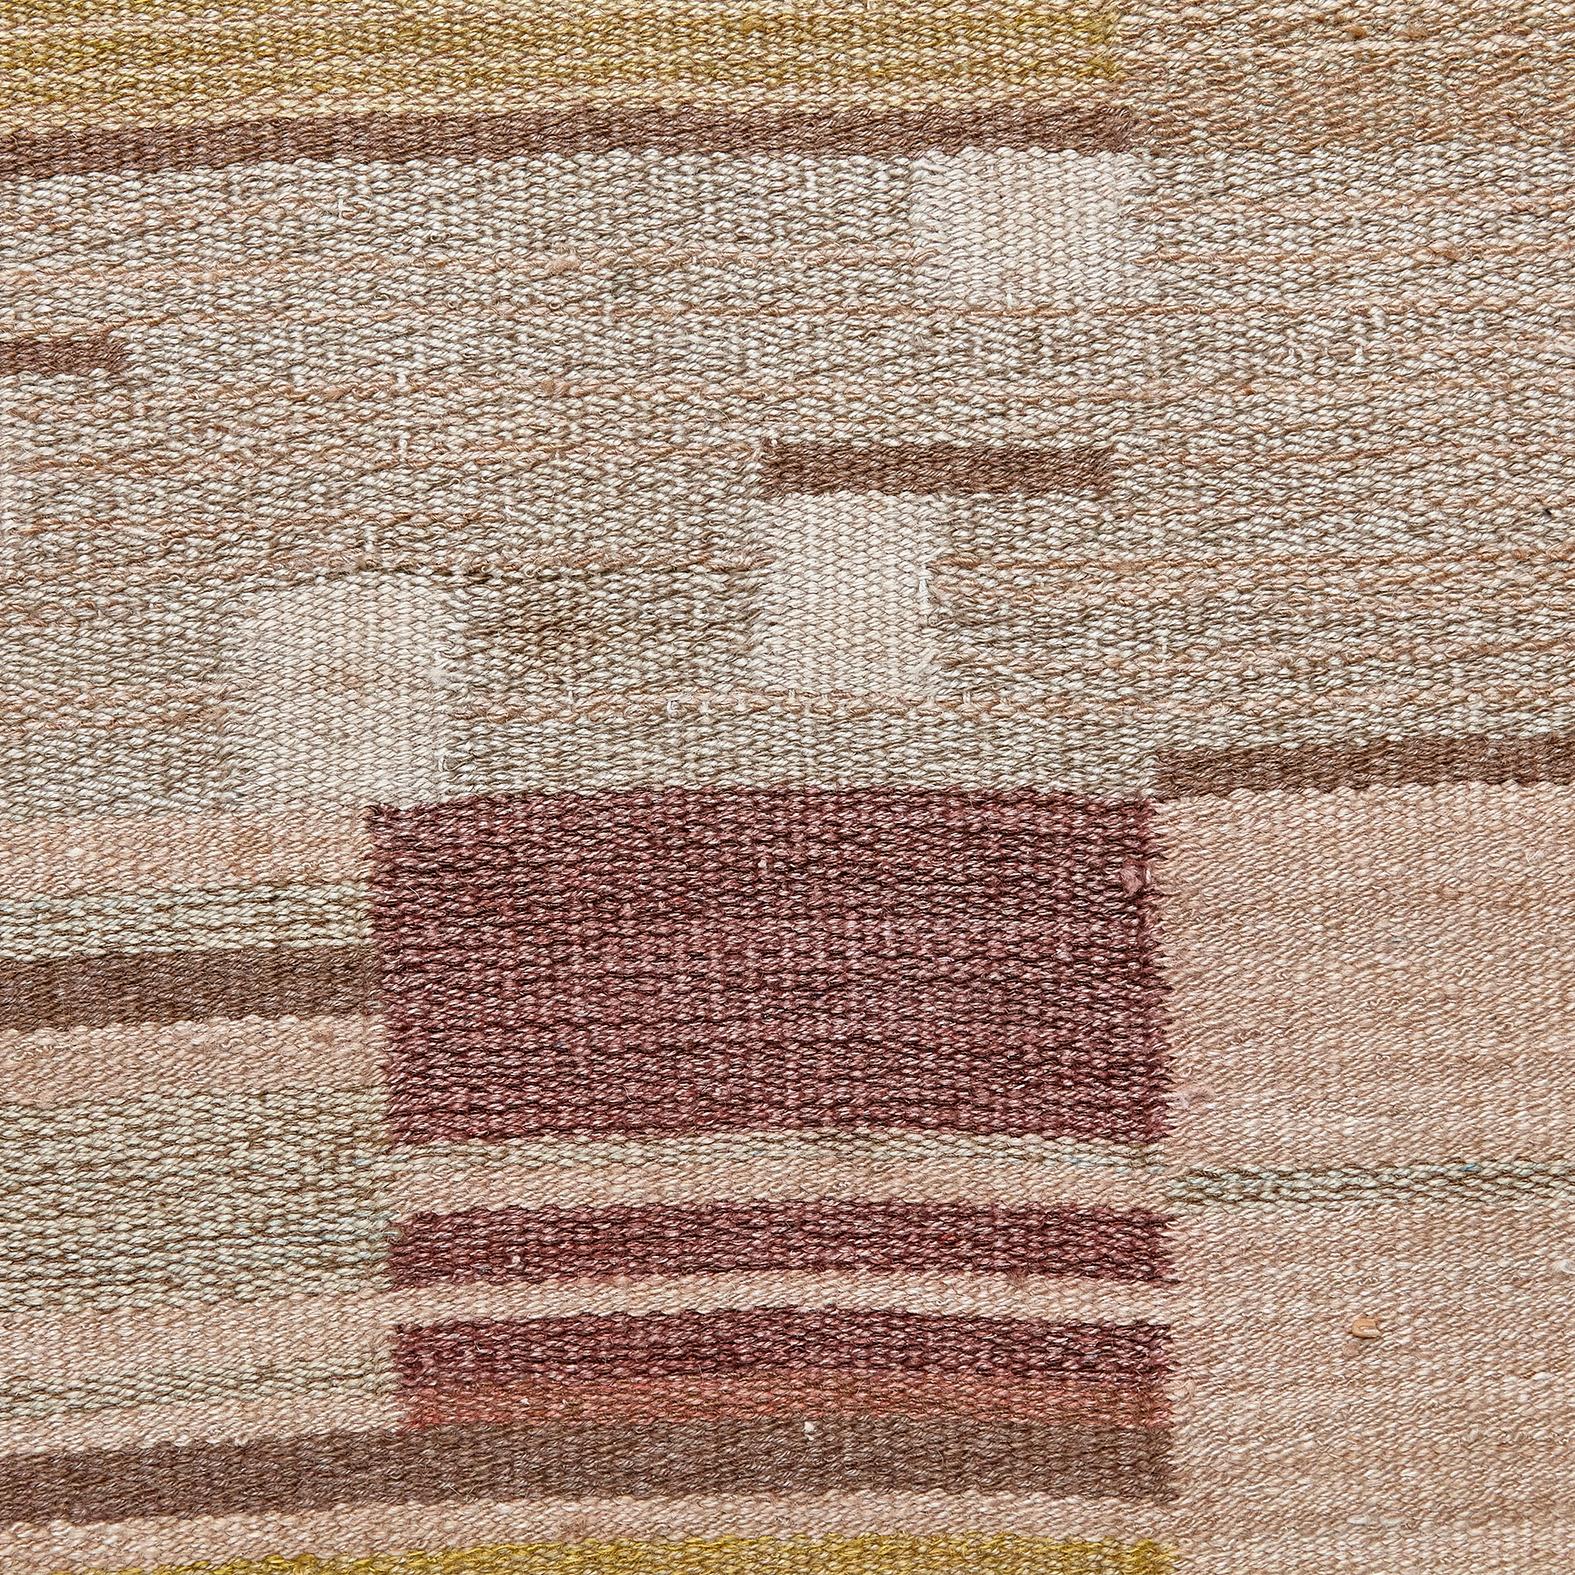 Laila Karttunen Finnish Flat-Weave Carpet for Kiikan Mattokutomo, 1930s 3